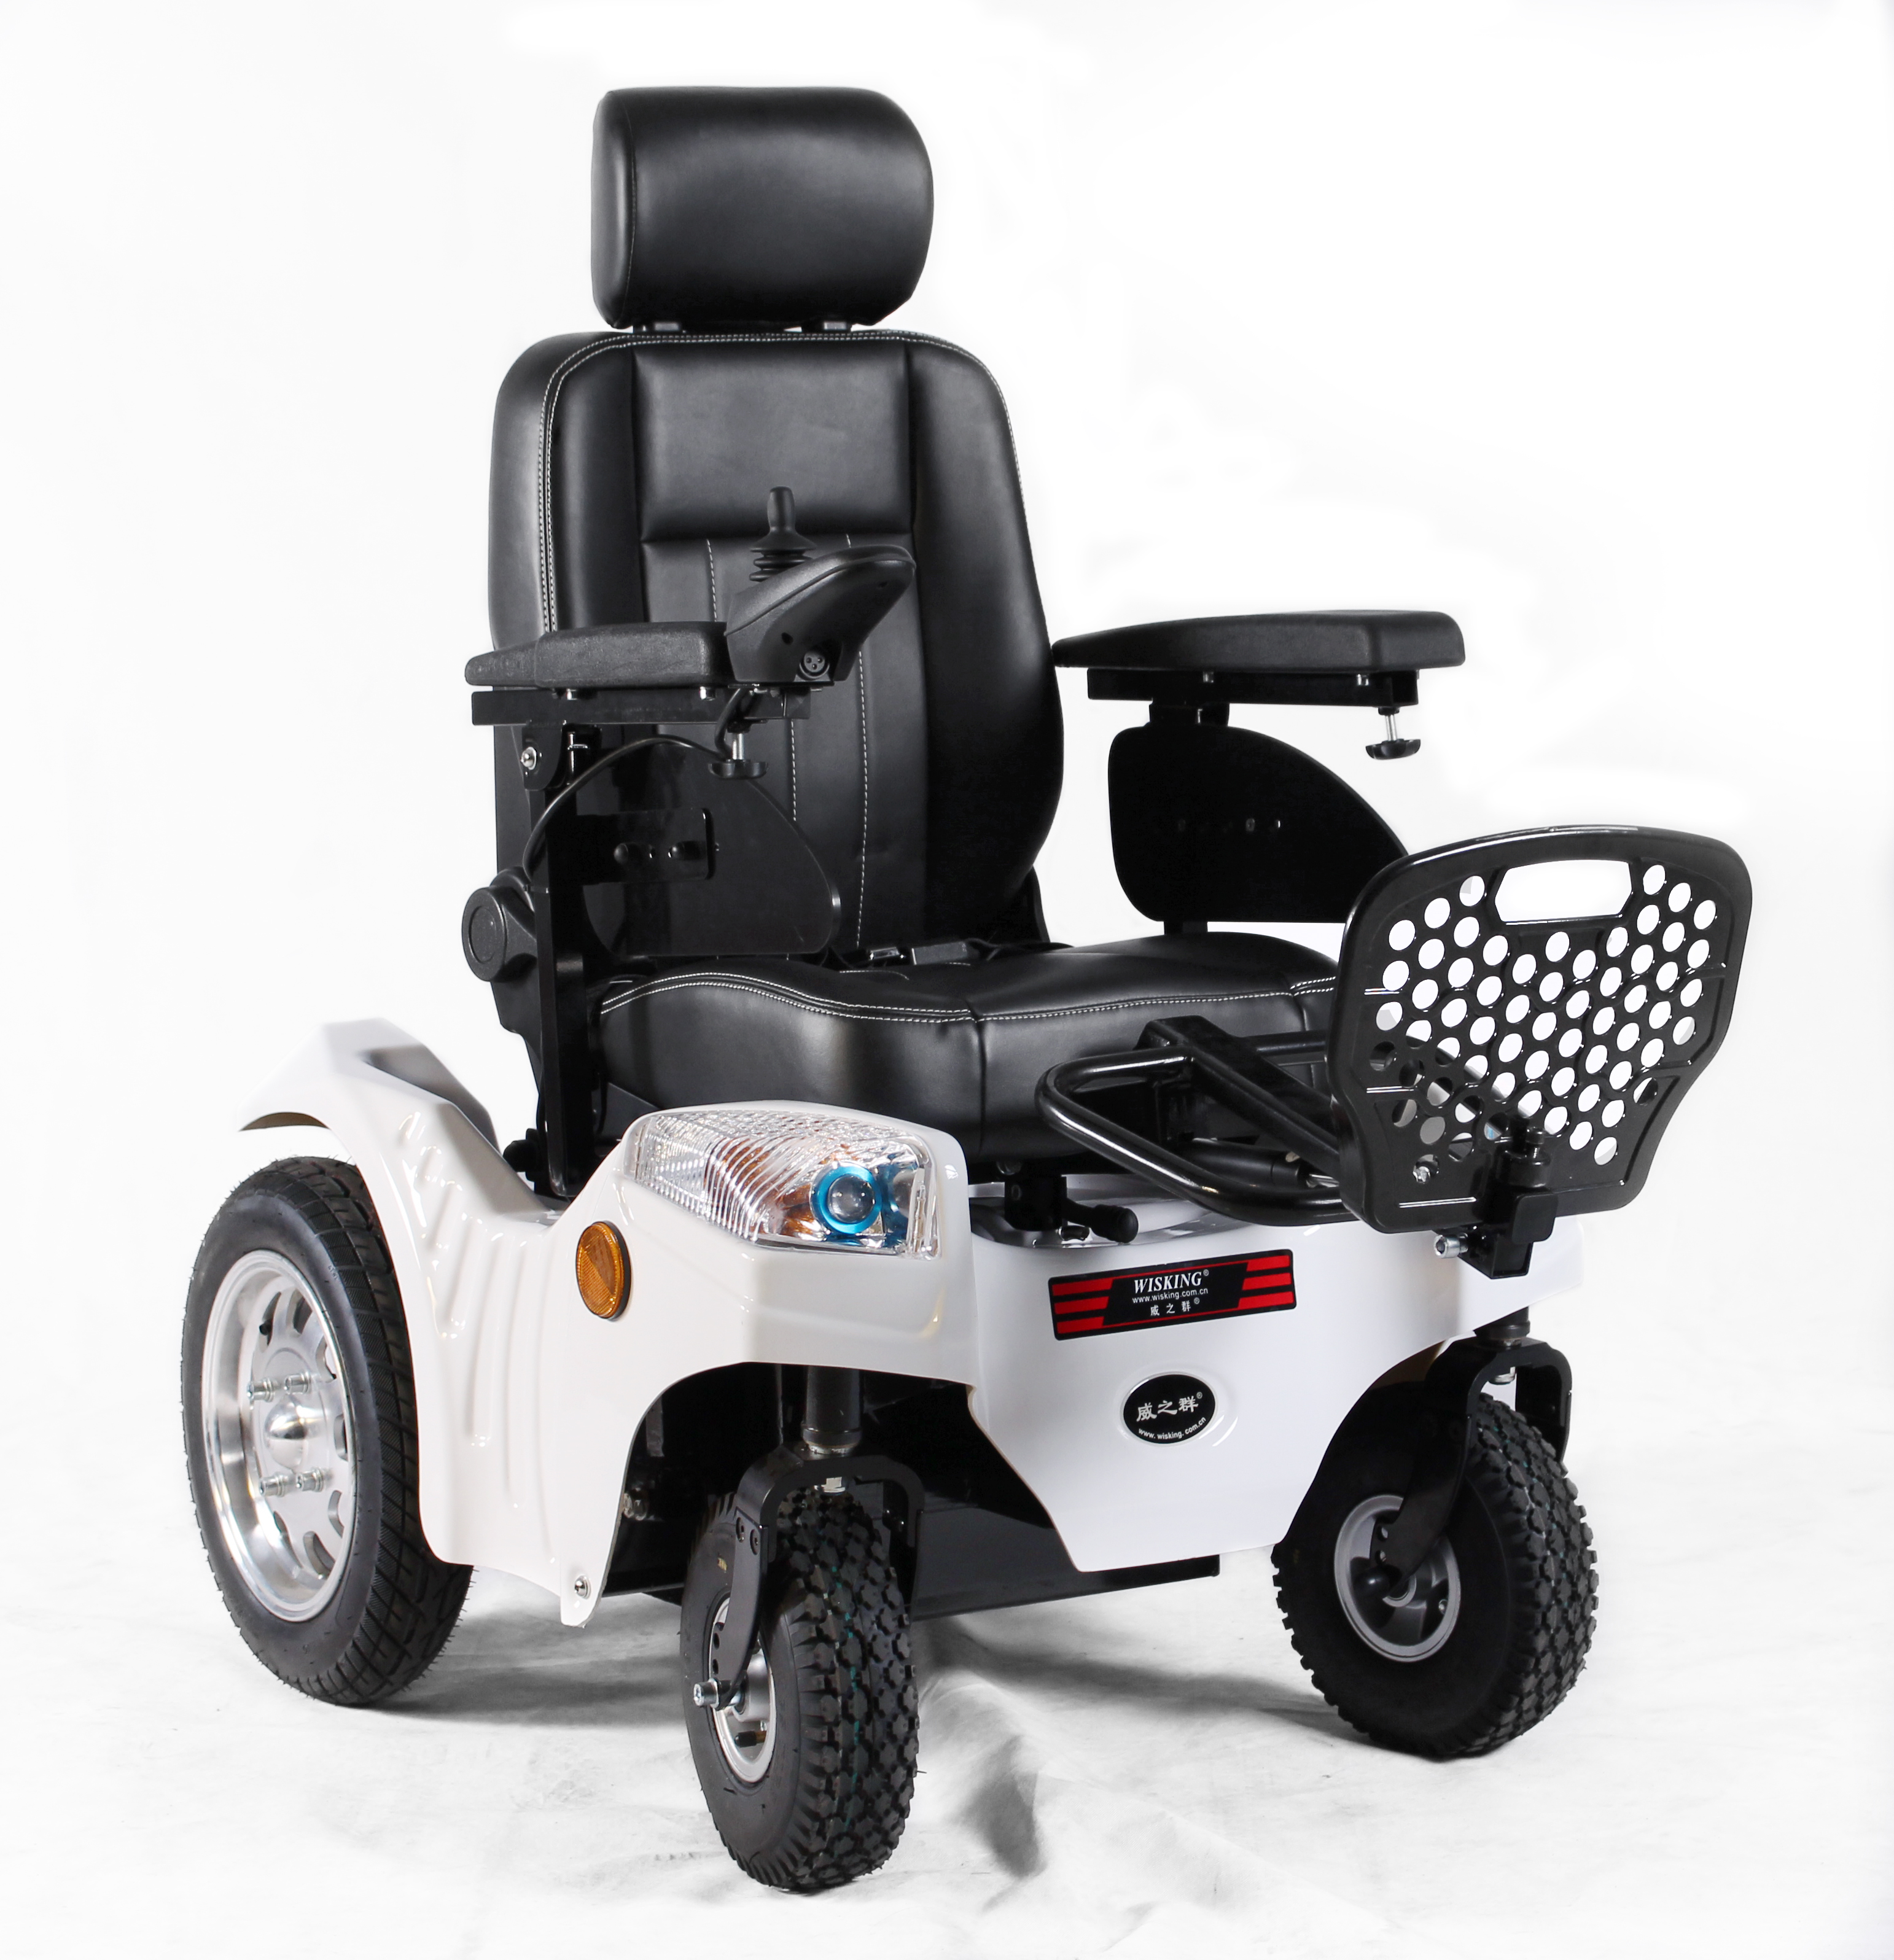 WISKING luxury outdoor power wheelchair for heavy body